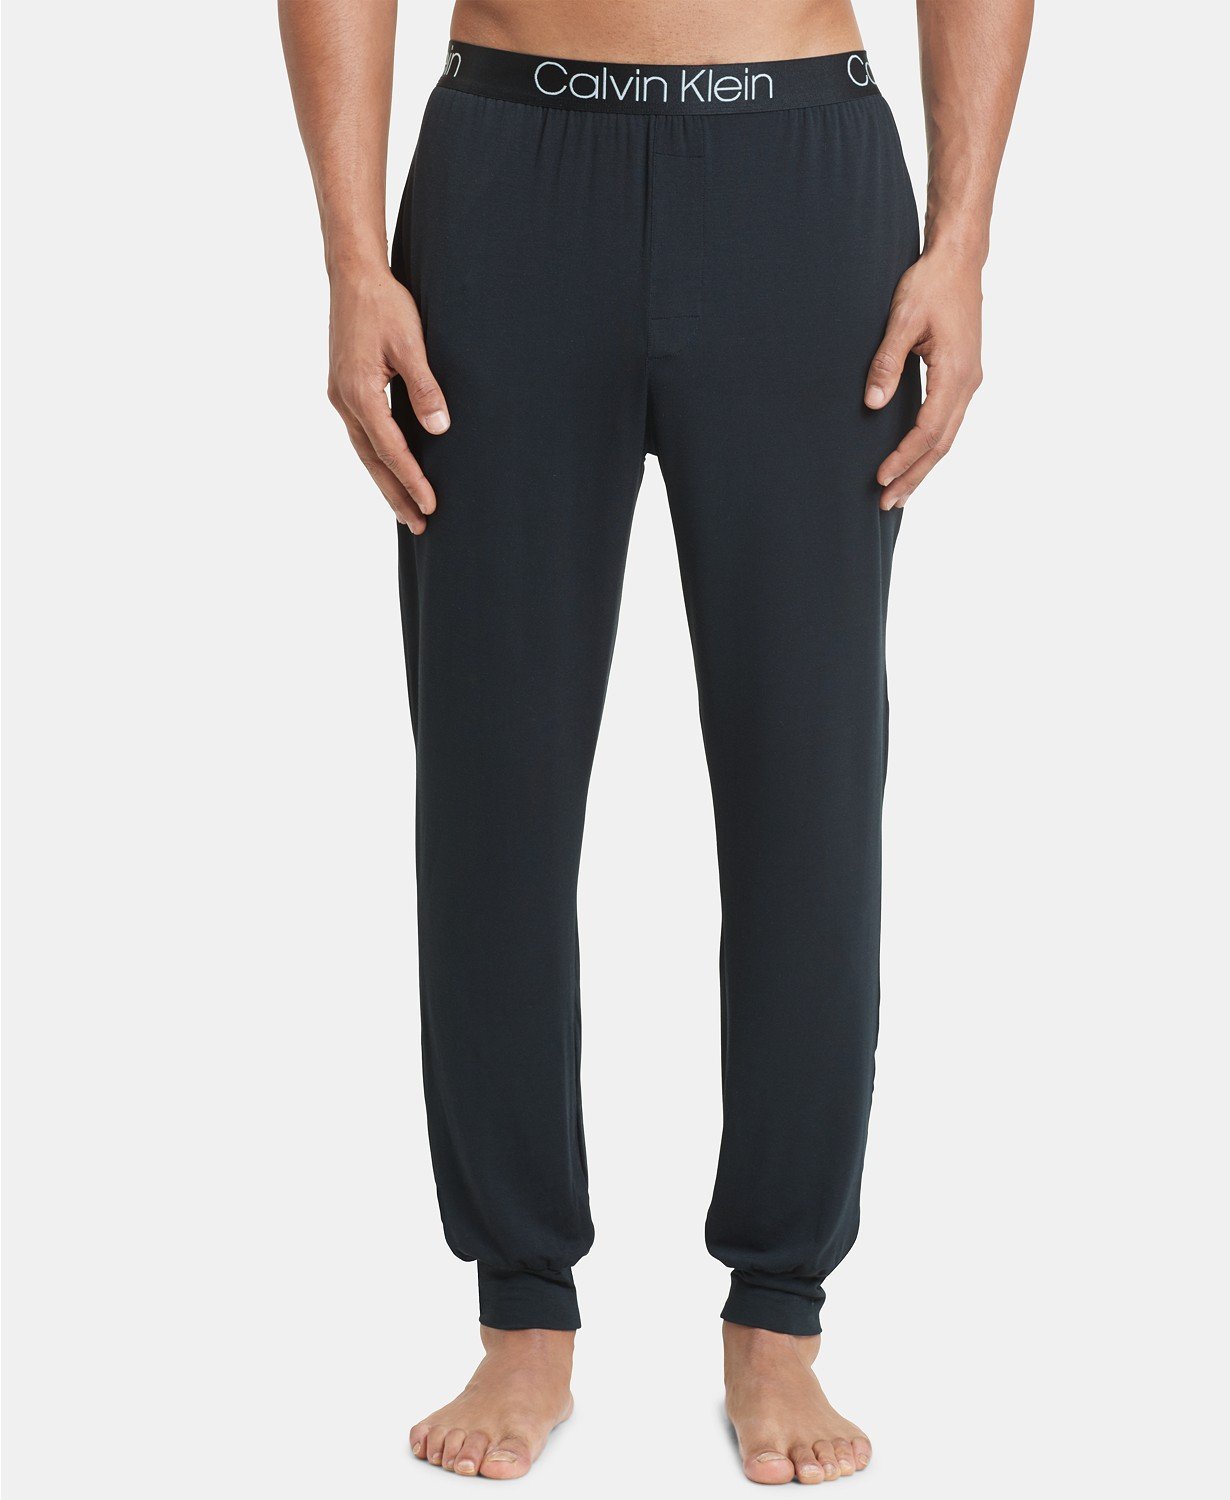 Calvin Klein Flannel Pyjama Bottoms | SportsDirect.com USA